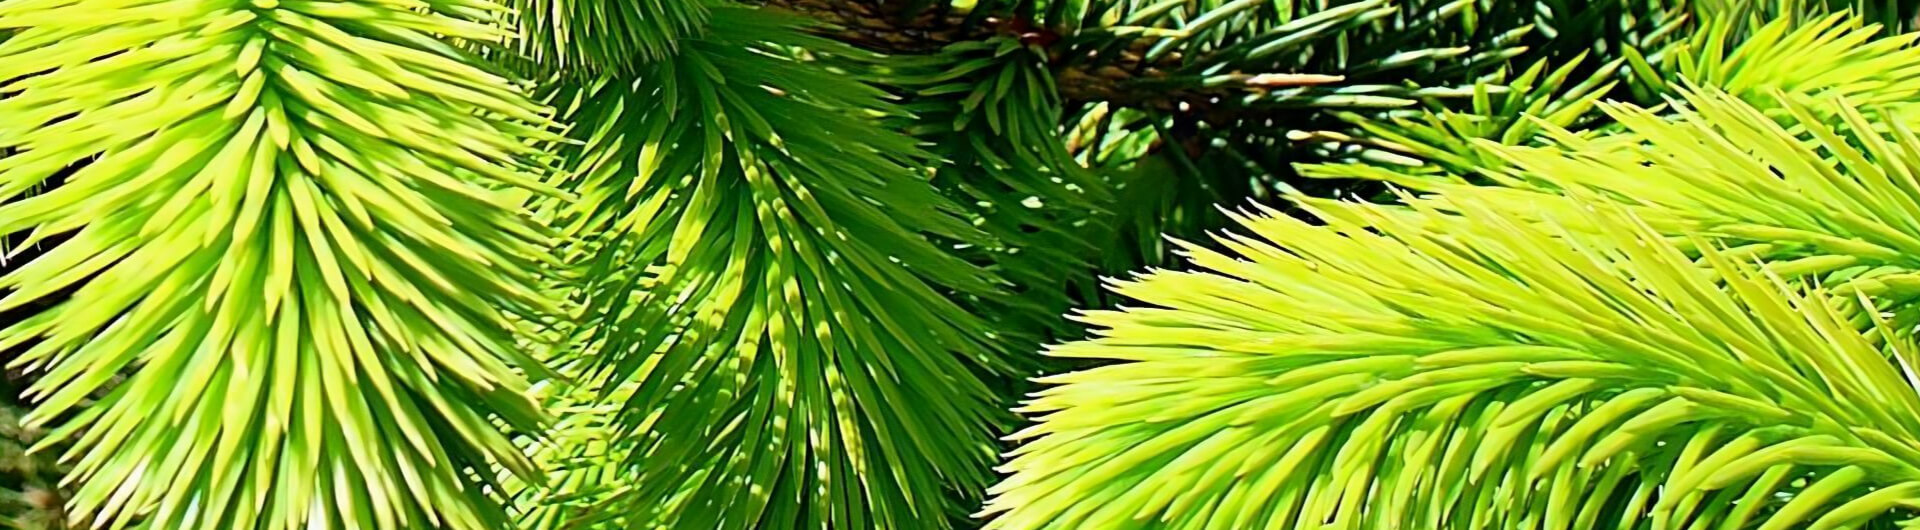 The main characteristics of conifers